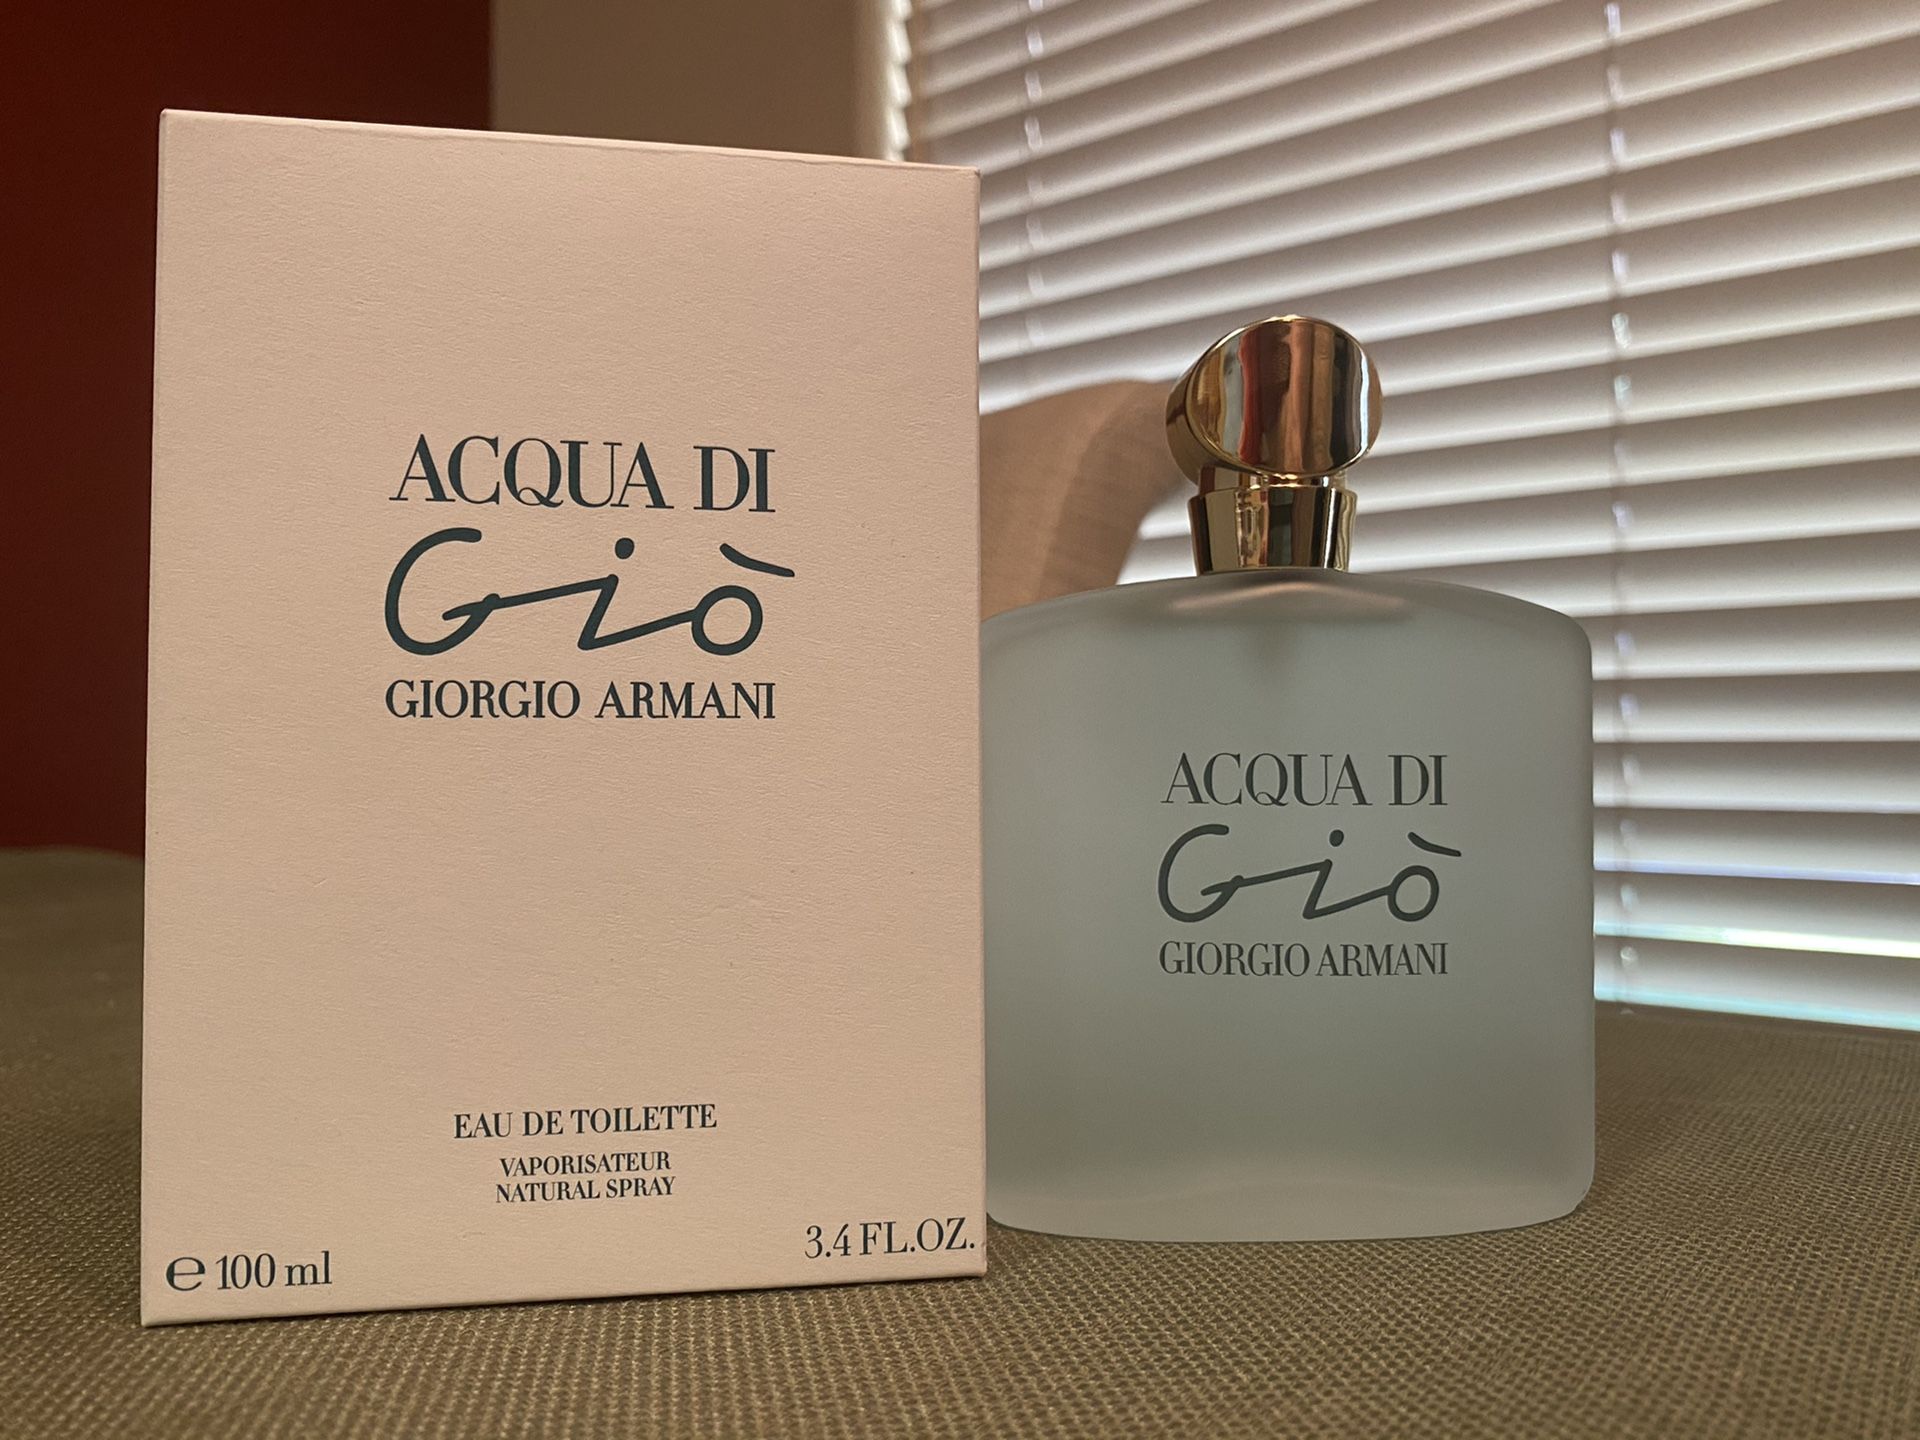 Brand new perfume